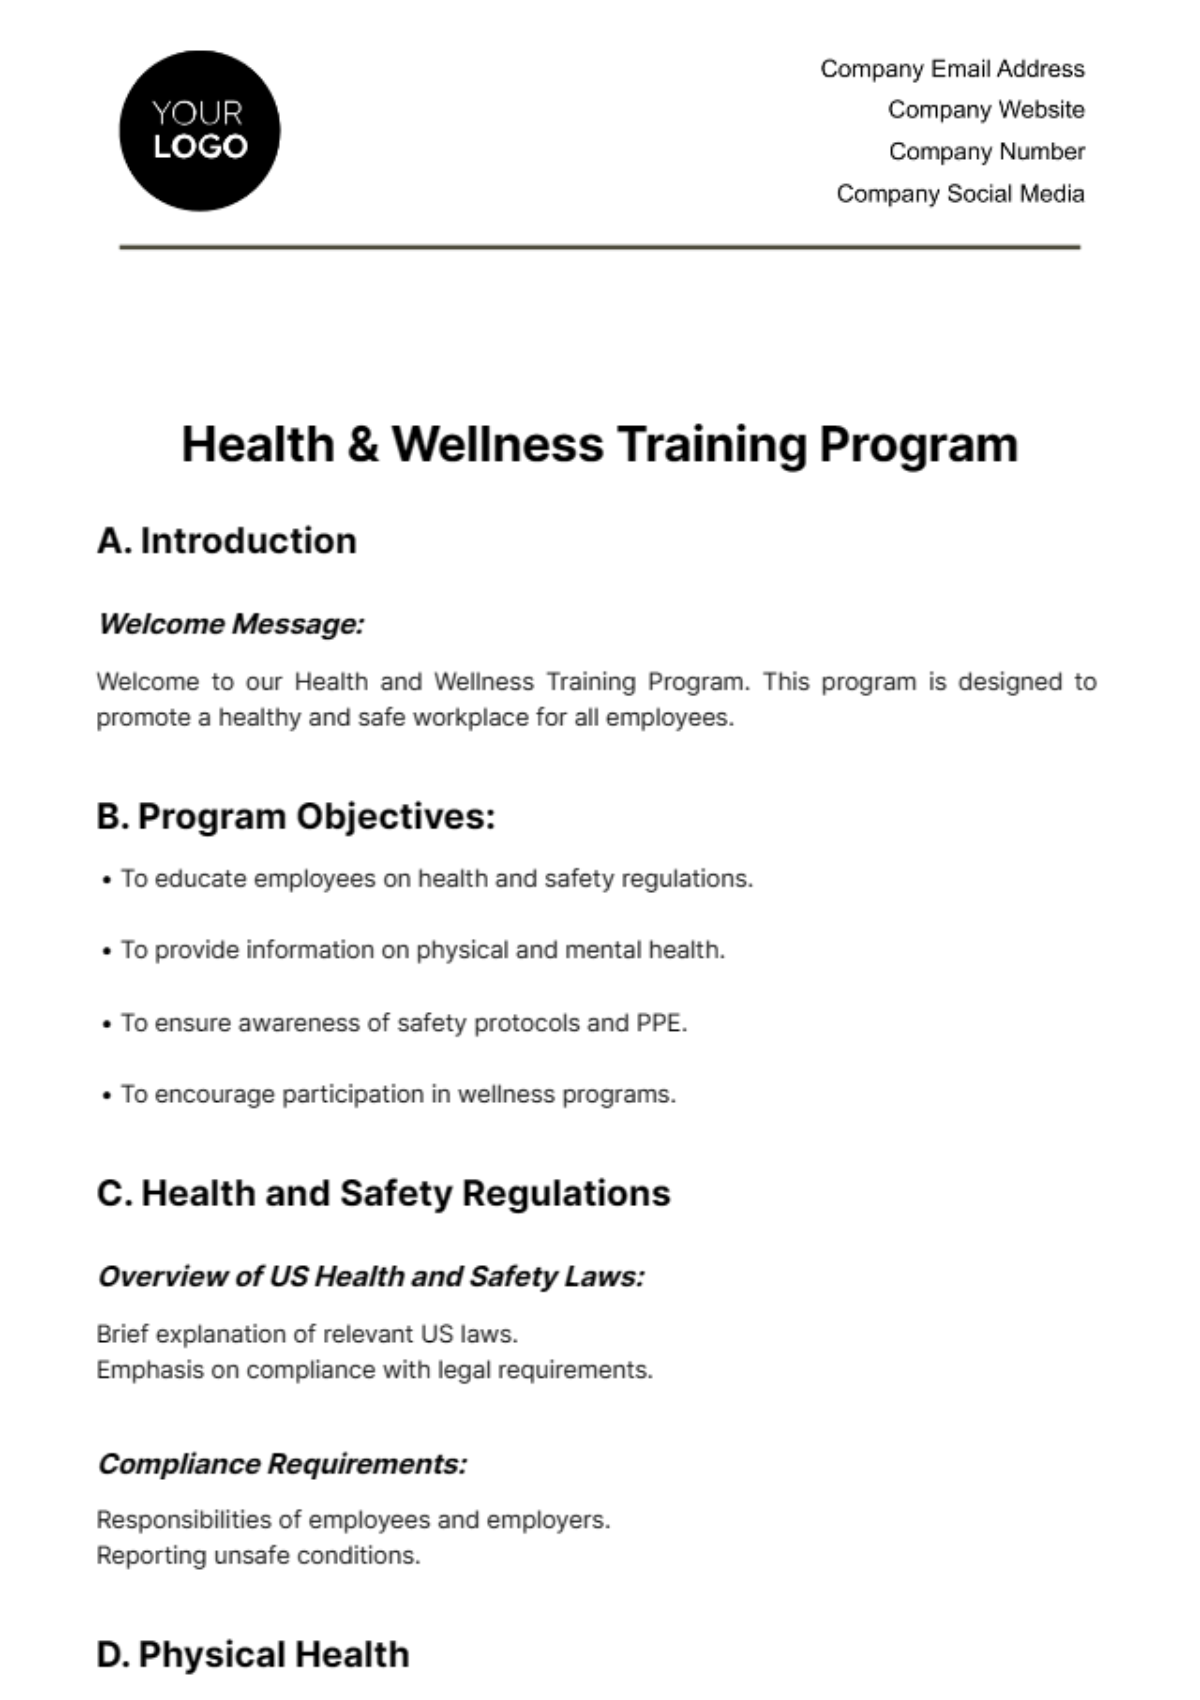 Health and Wellness Training Program Template